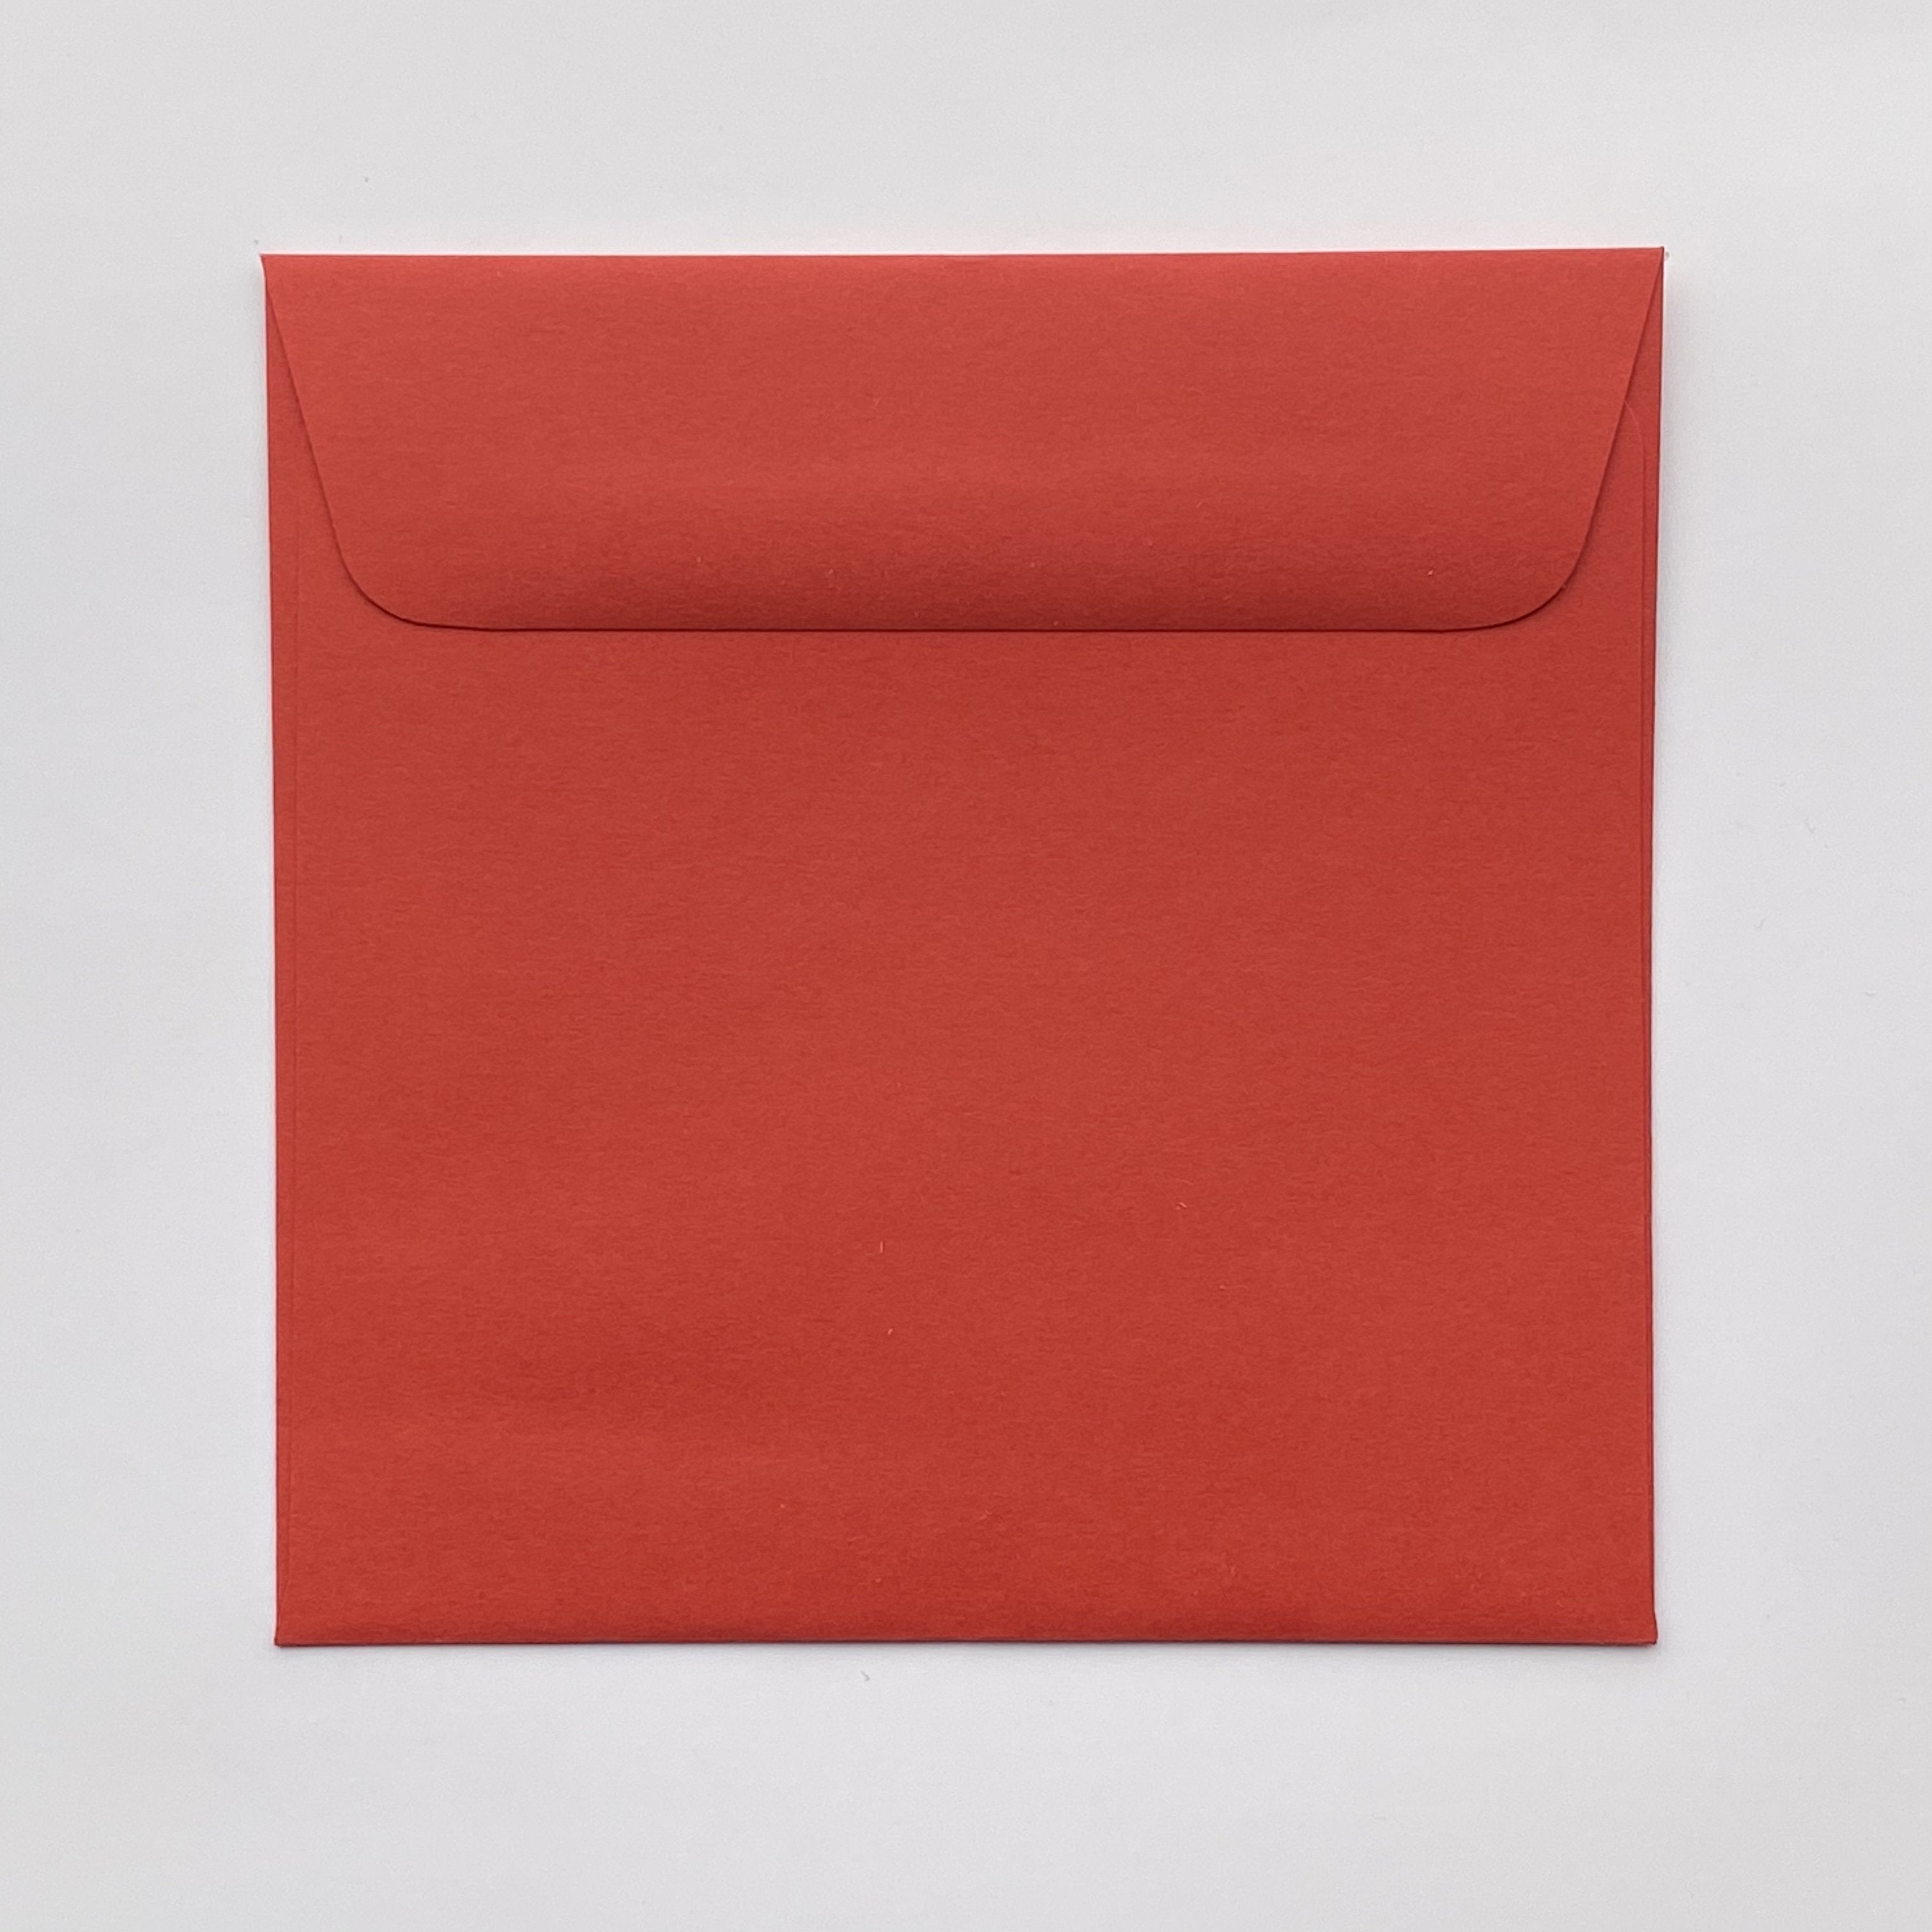 90mm square coloured envelopes